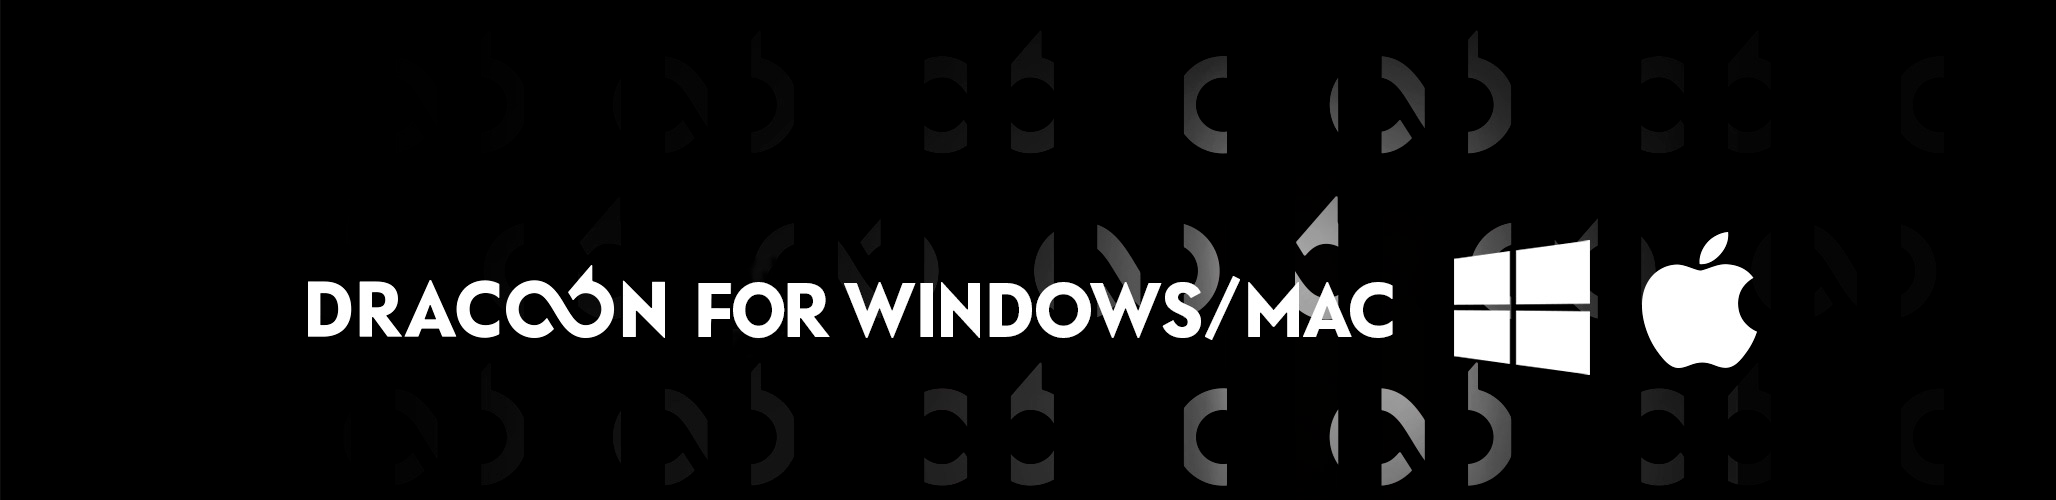 dracoon-für-windows-mac-header-en